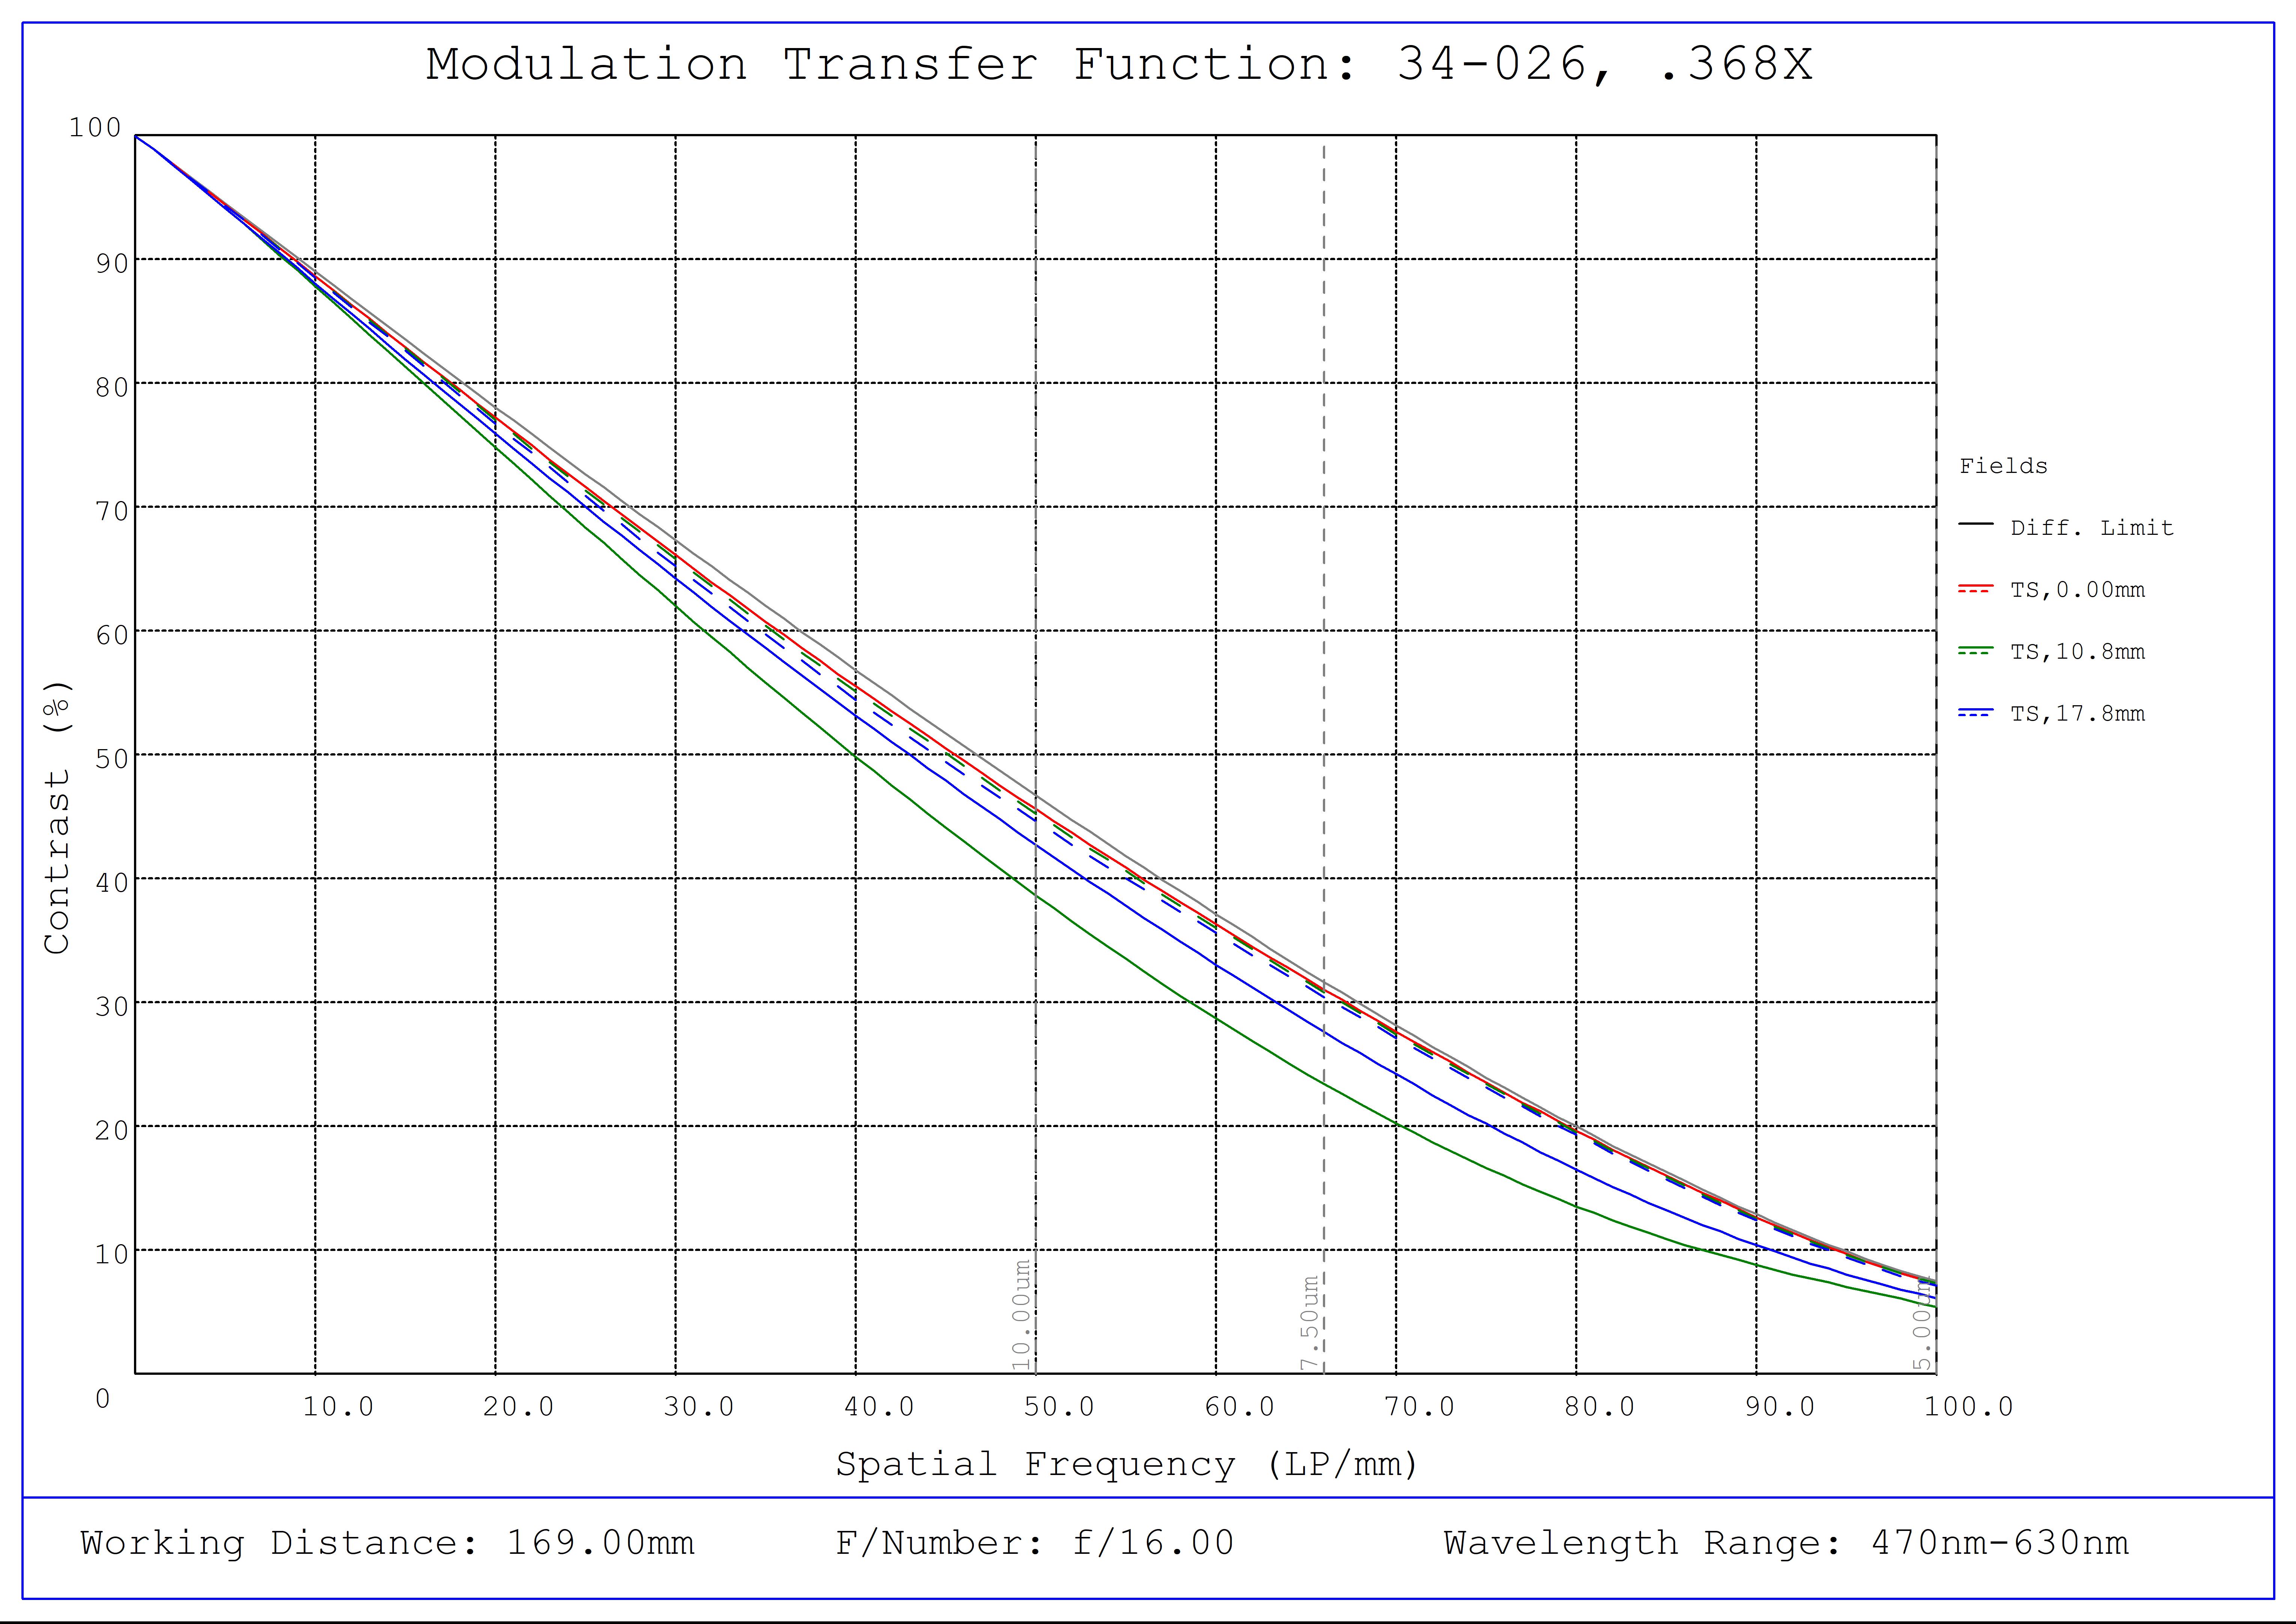 #34-026, 0.368X, 35mm M42 x 1.0 TitanTL® Telecentric Lens, Modulated Transfer Function (MTF) Plot, 169mm Working Distance, f16